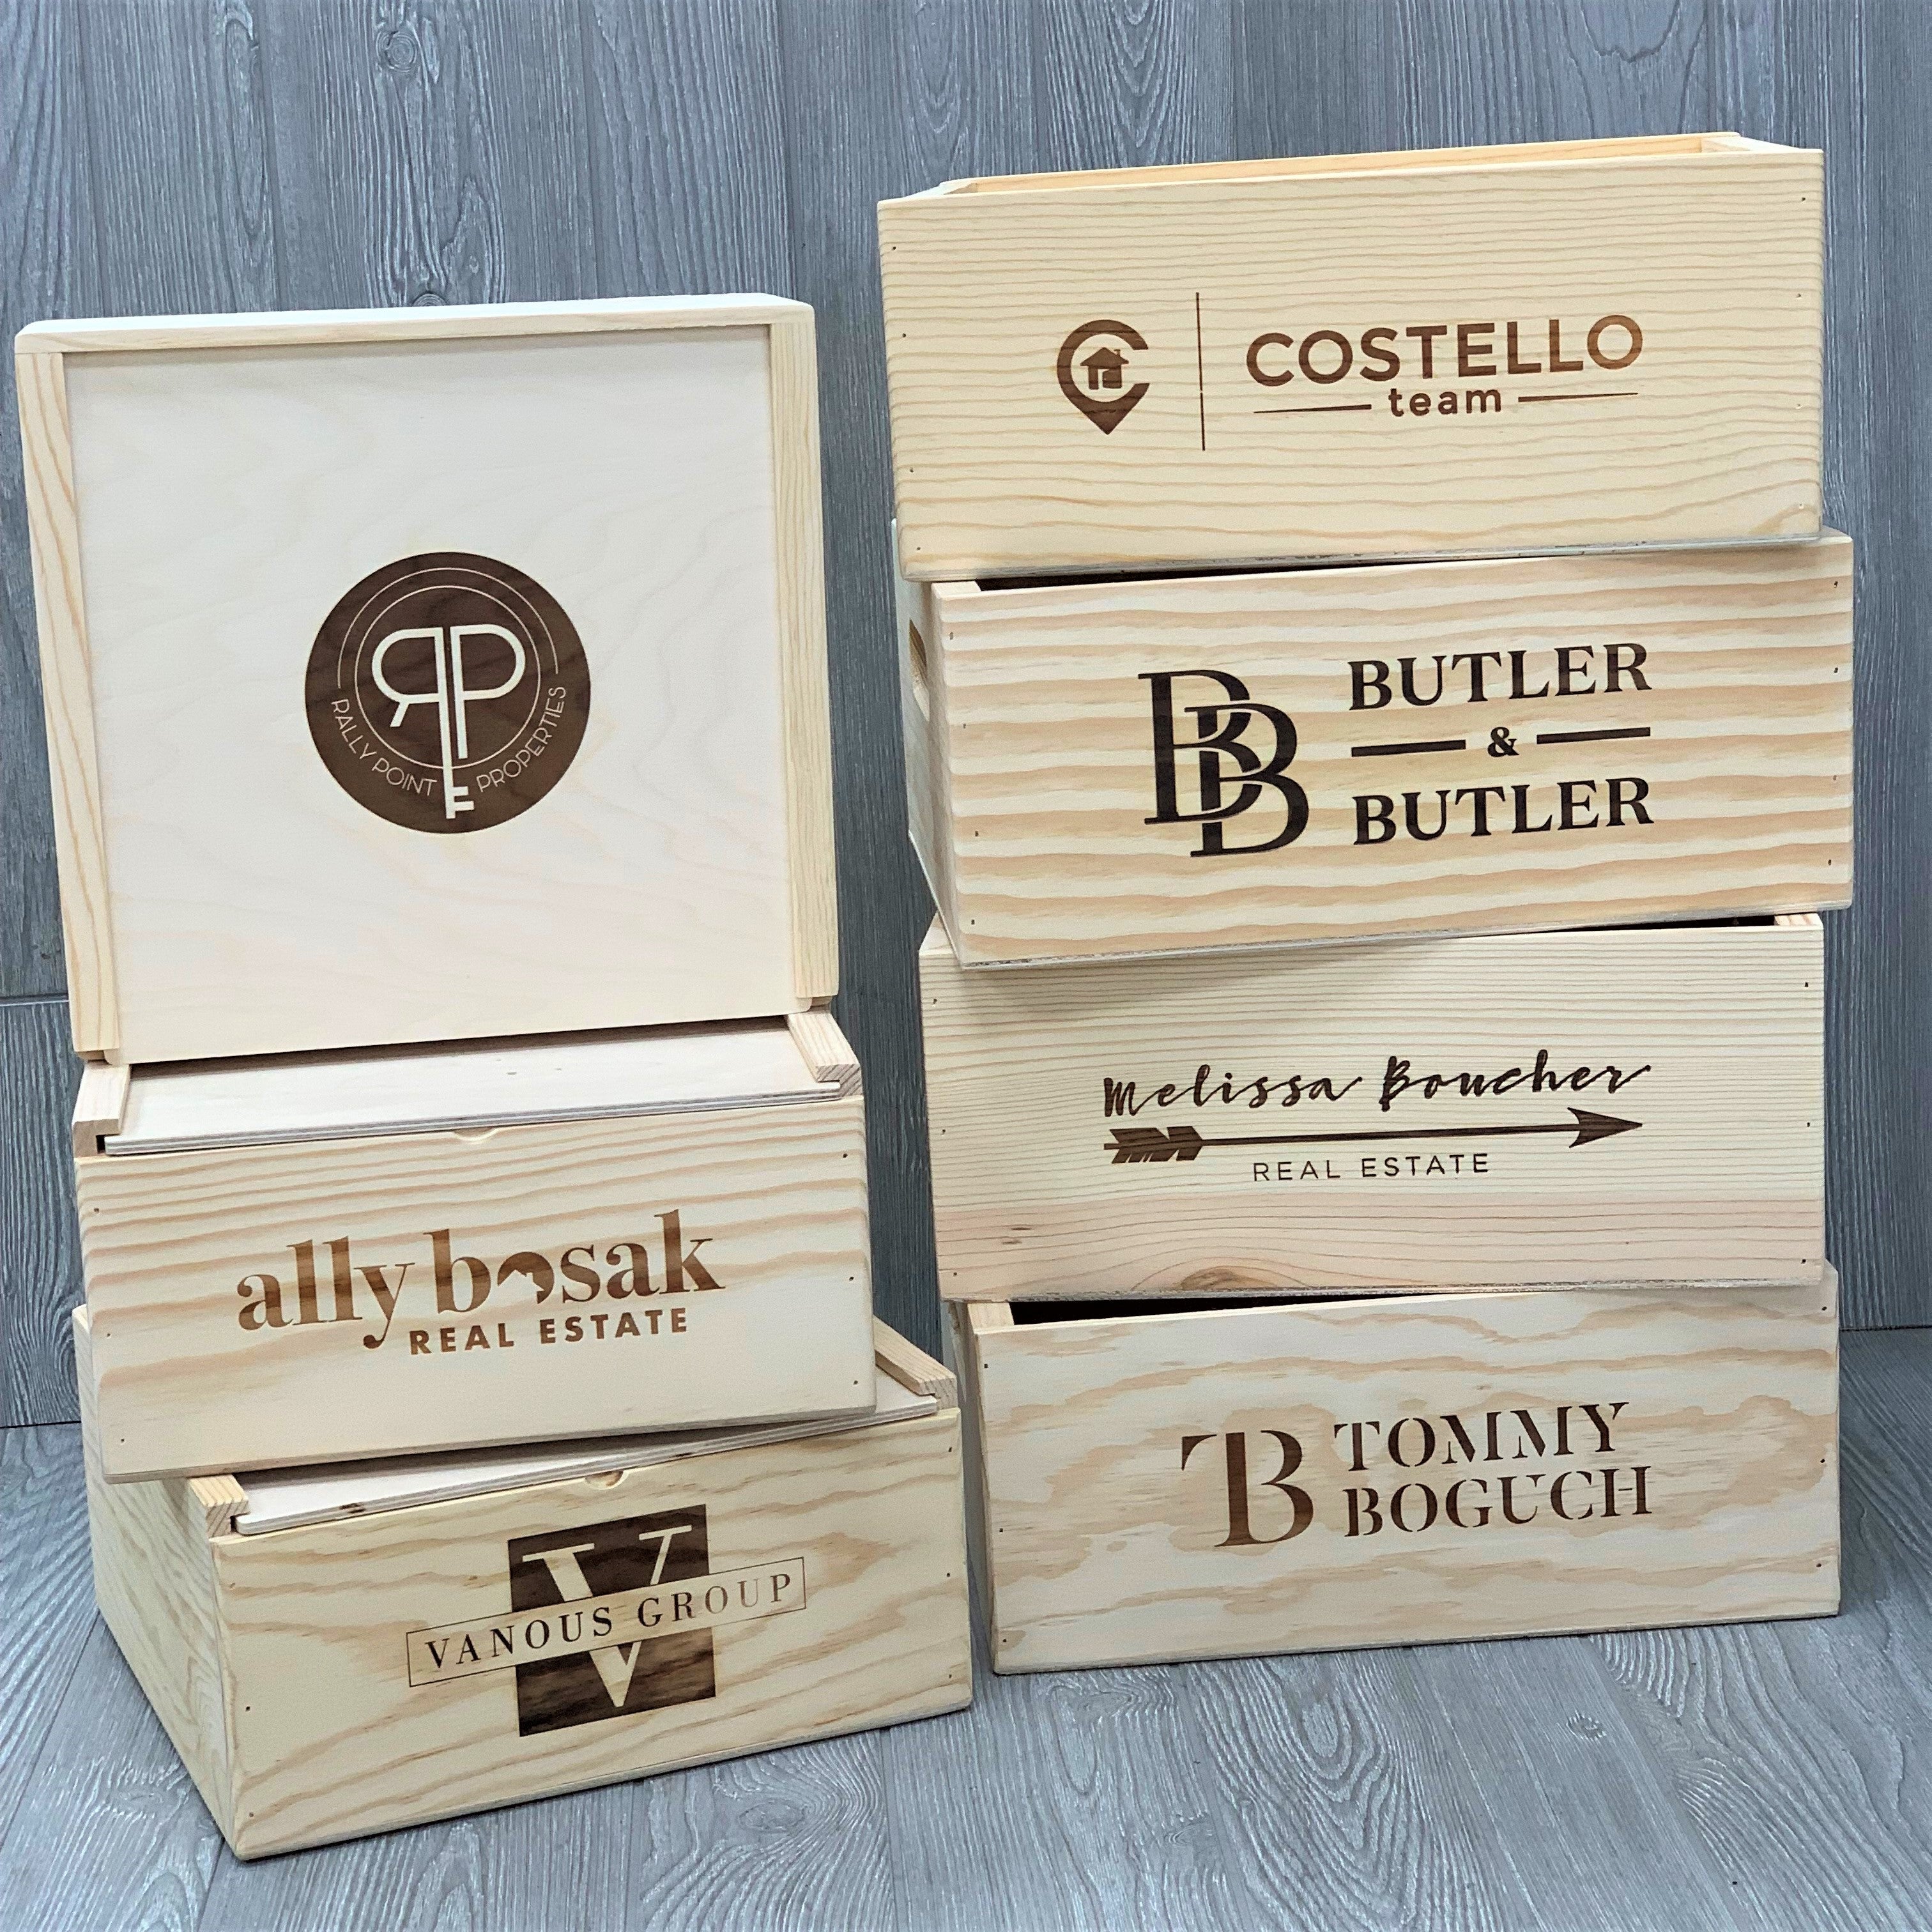 seven custom gift baskets with custom real estate agent logos